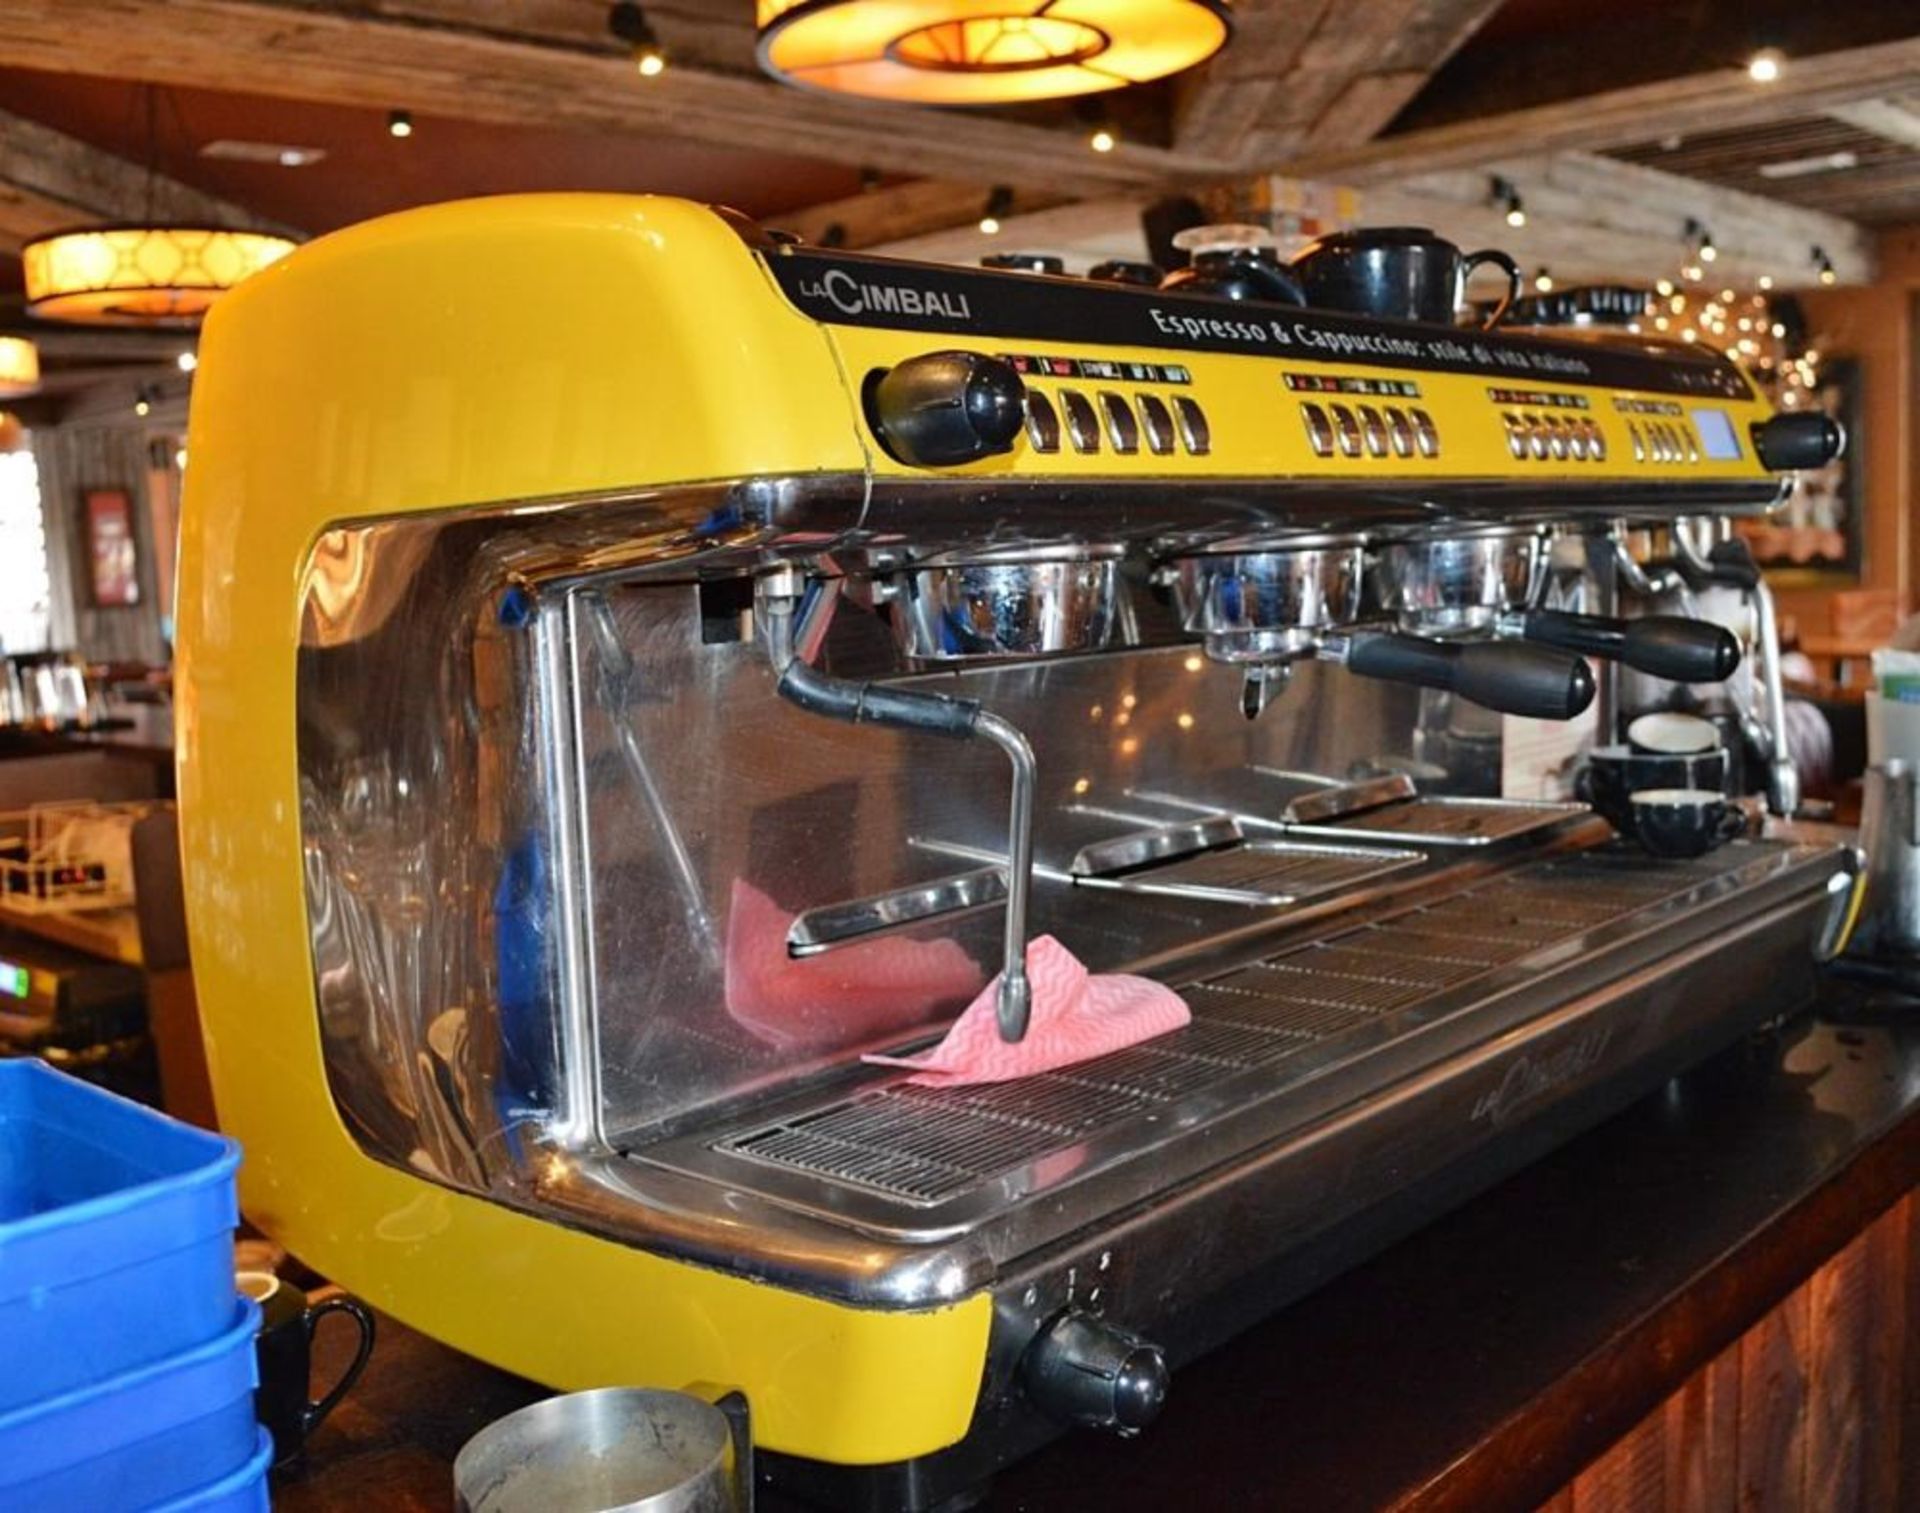 1 x La Cimbalie Espresso 3 Group Coffee Machine in Yellow - Model M39 Dosatron - Approx Dimensions - Image 5 of 6